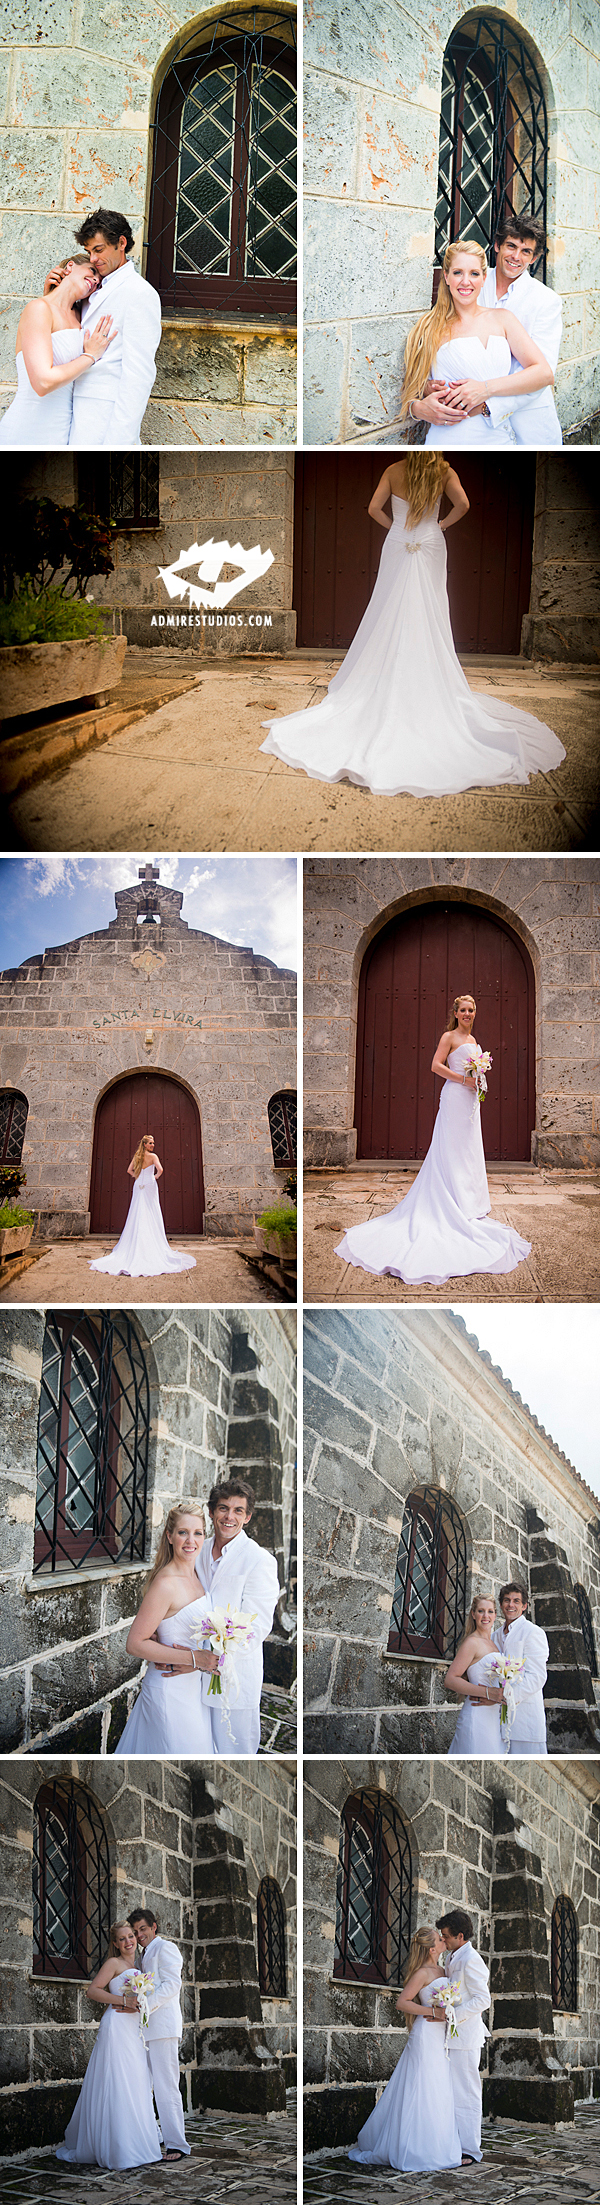 santa elvira church veradero wedding photography